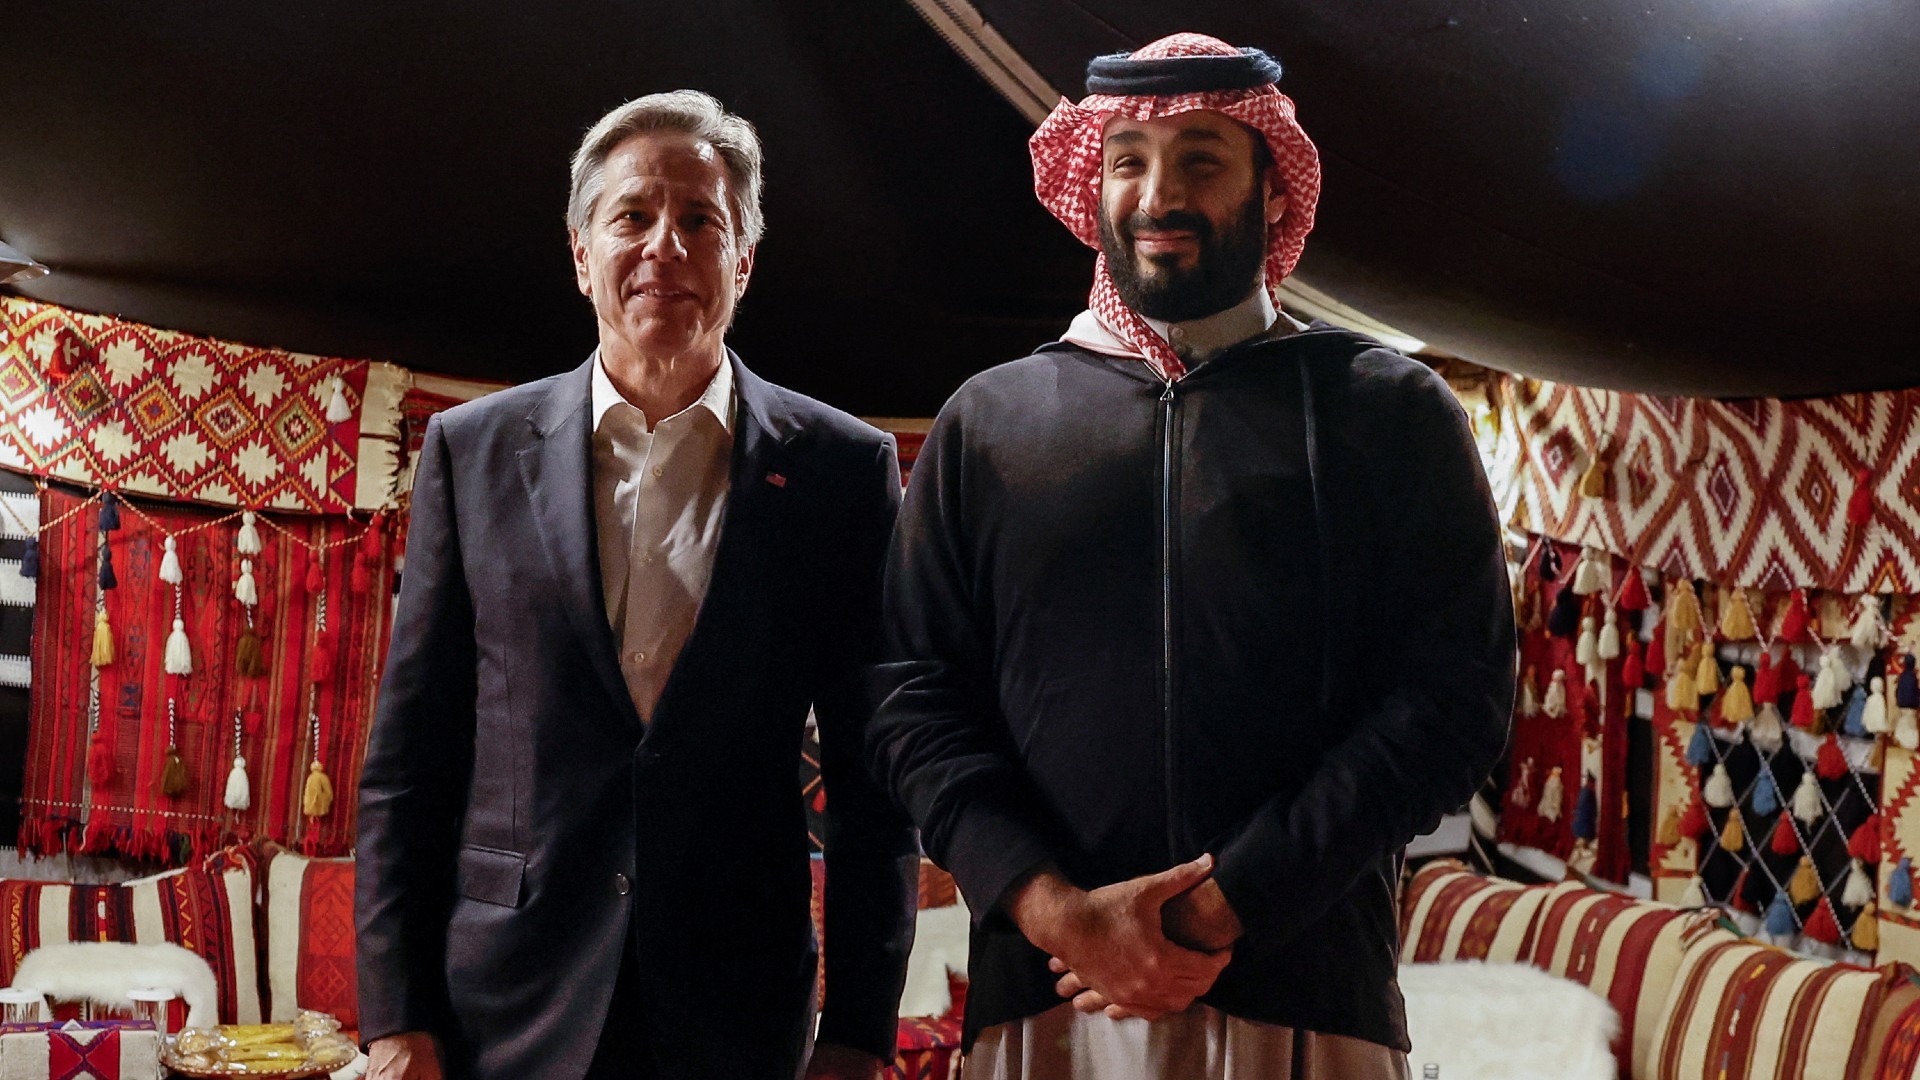 US Secretary of State Antony Blinken meets with Saudi Crown Prince Mohammed bin Salman in Saudi Arabia on 8 January (Reuters)